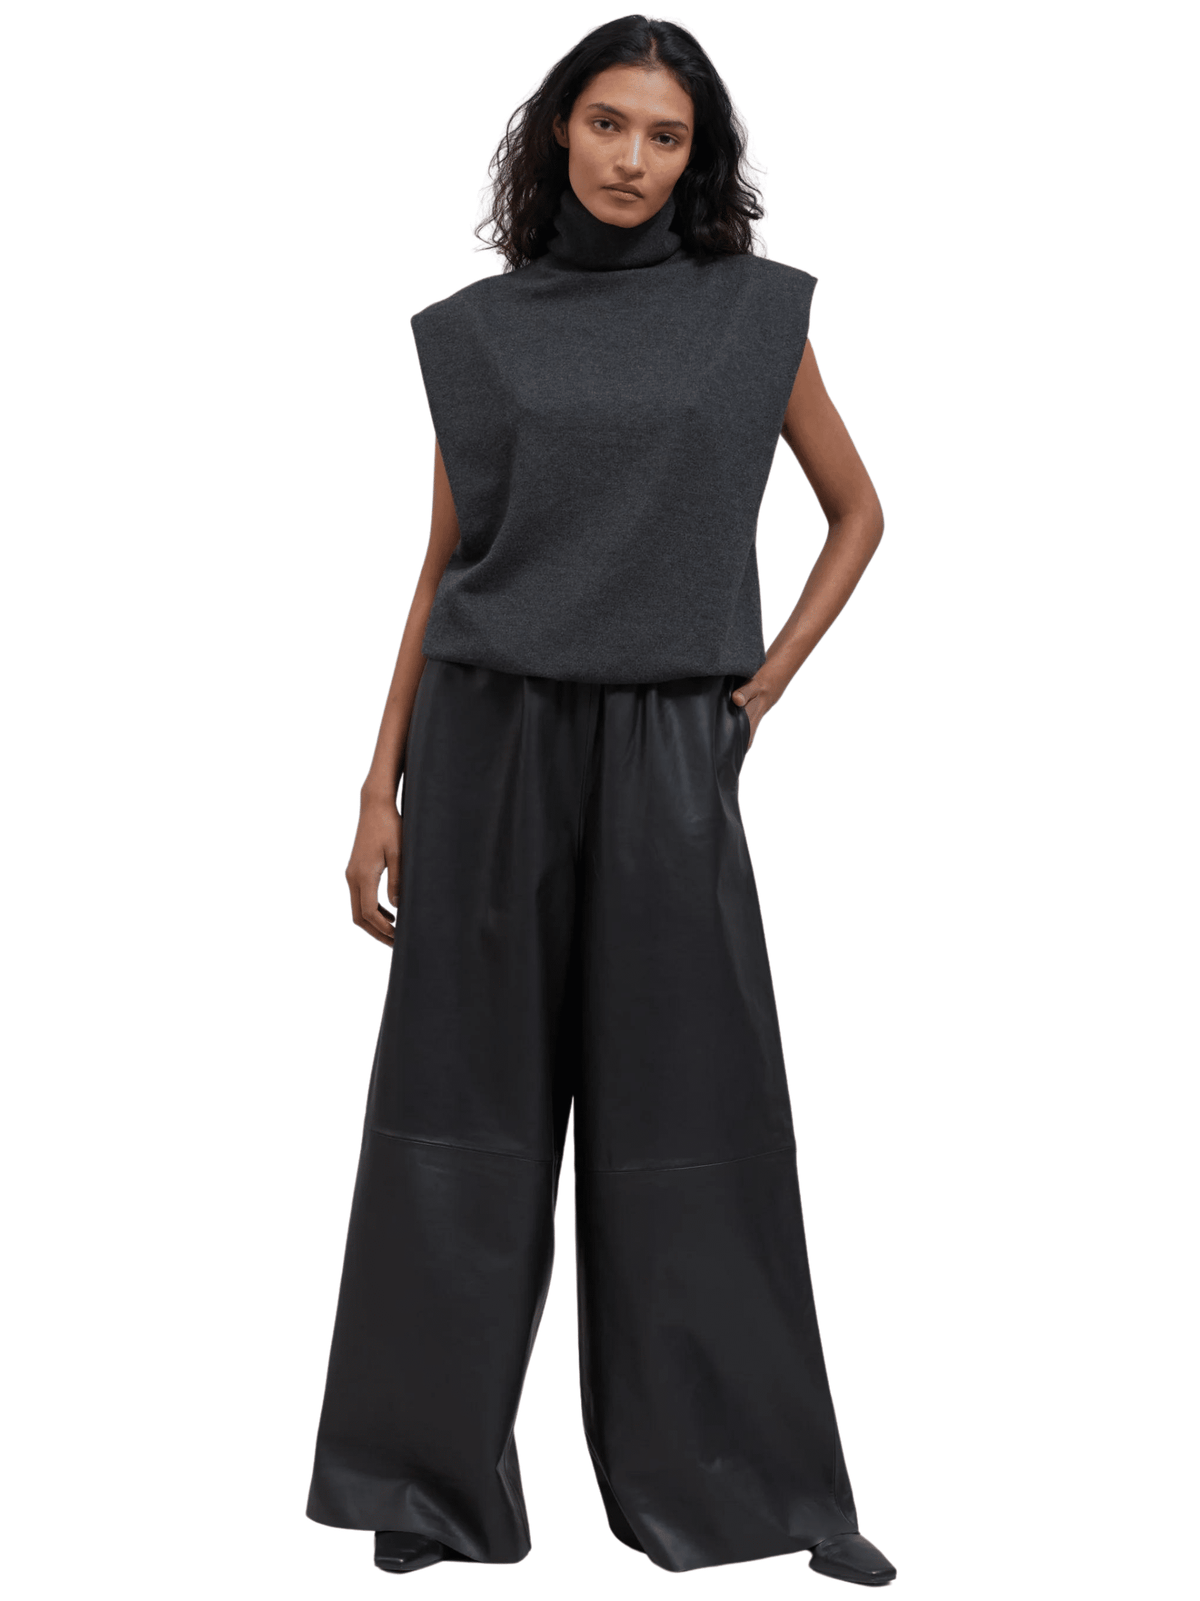 Sydney Wide Leather Pants / Black Womens Frankie Shop 